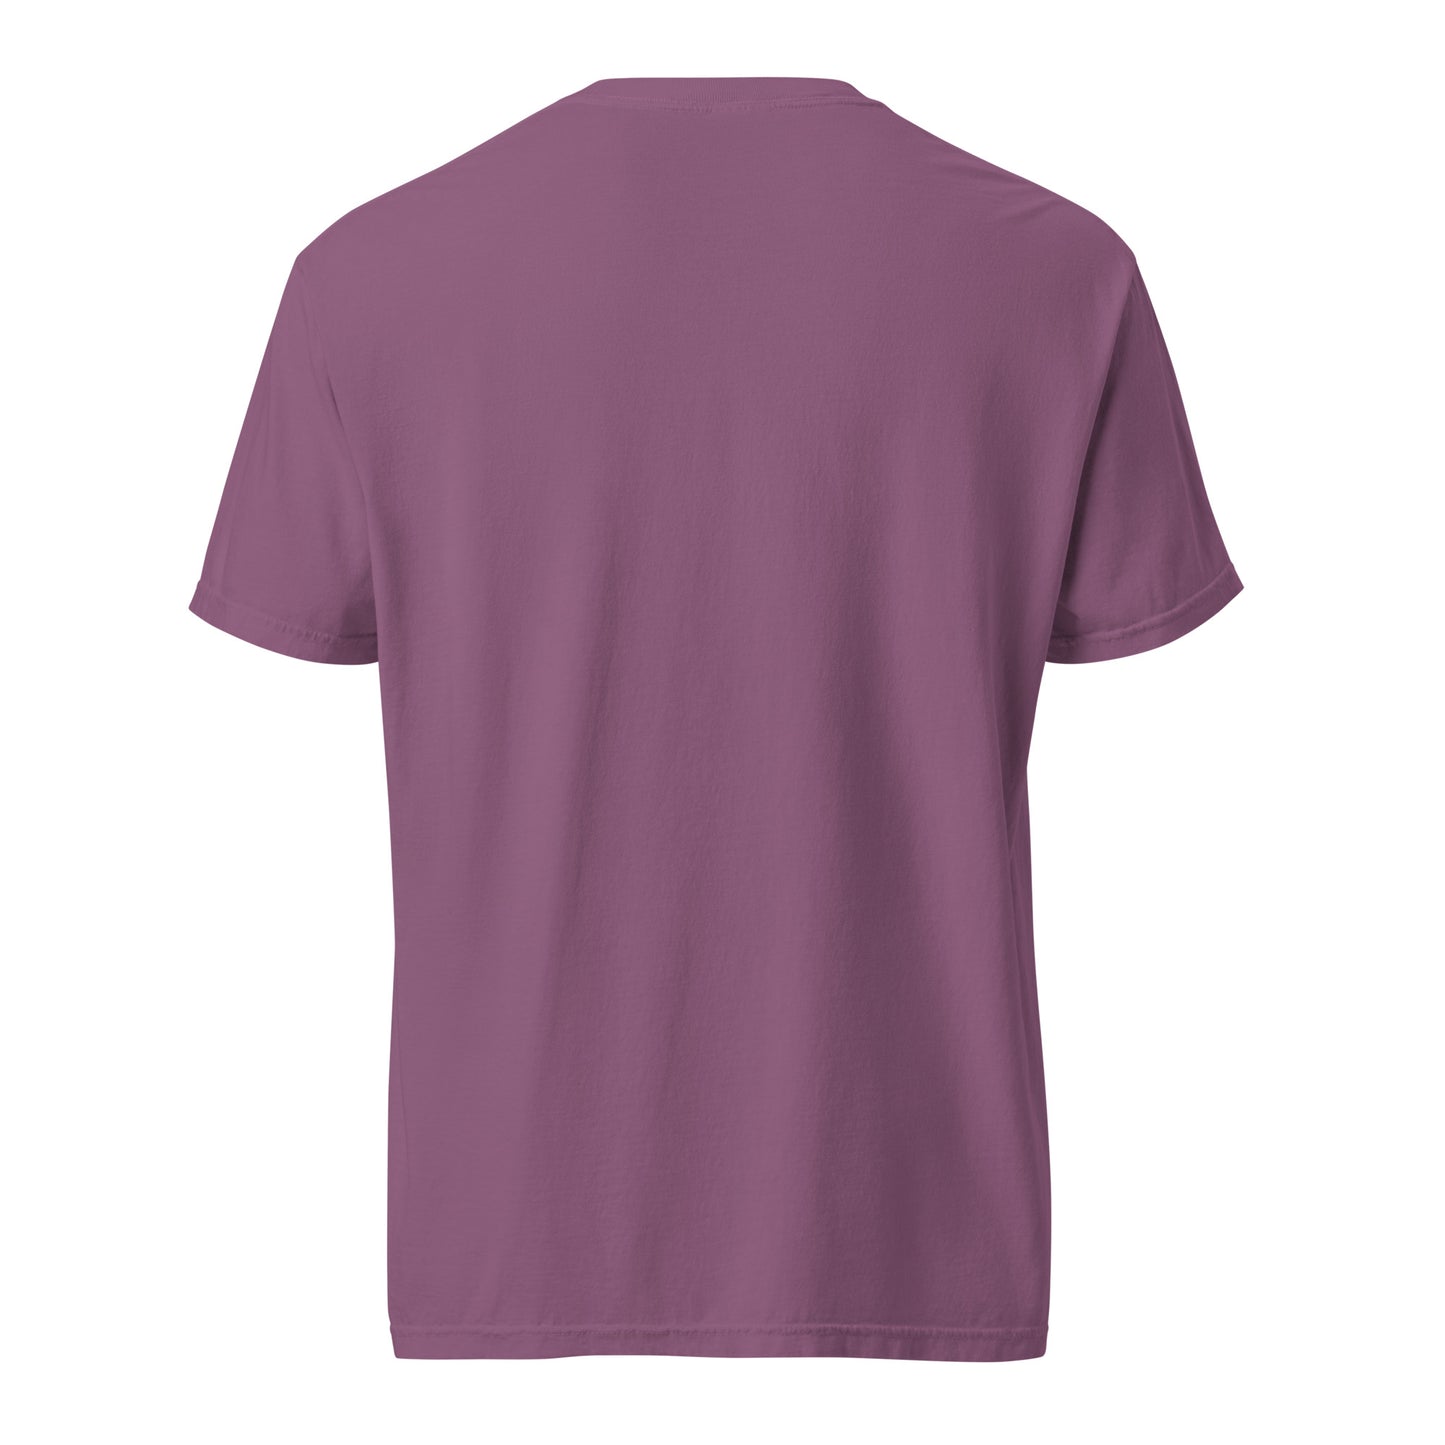 T-Shirt My Tits Will Not Be Calmed Unisex garment-dyed heavyweight t-shirt